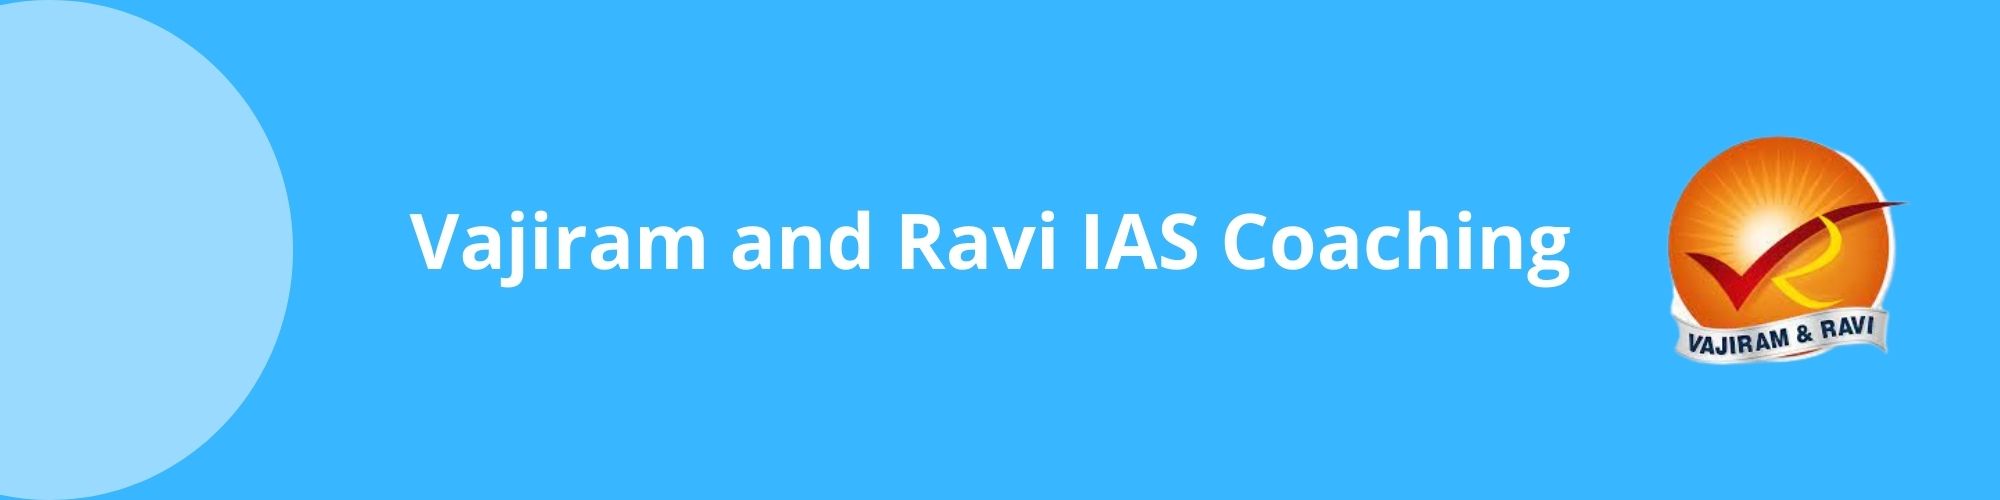 Vajiram and ravi ias coaching